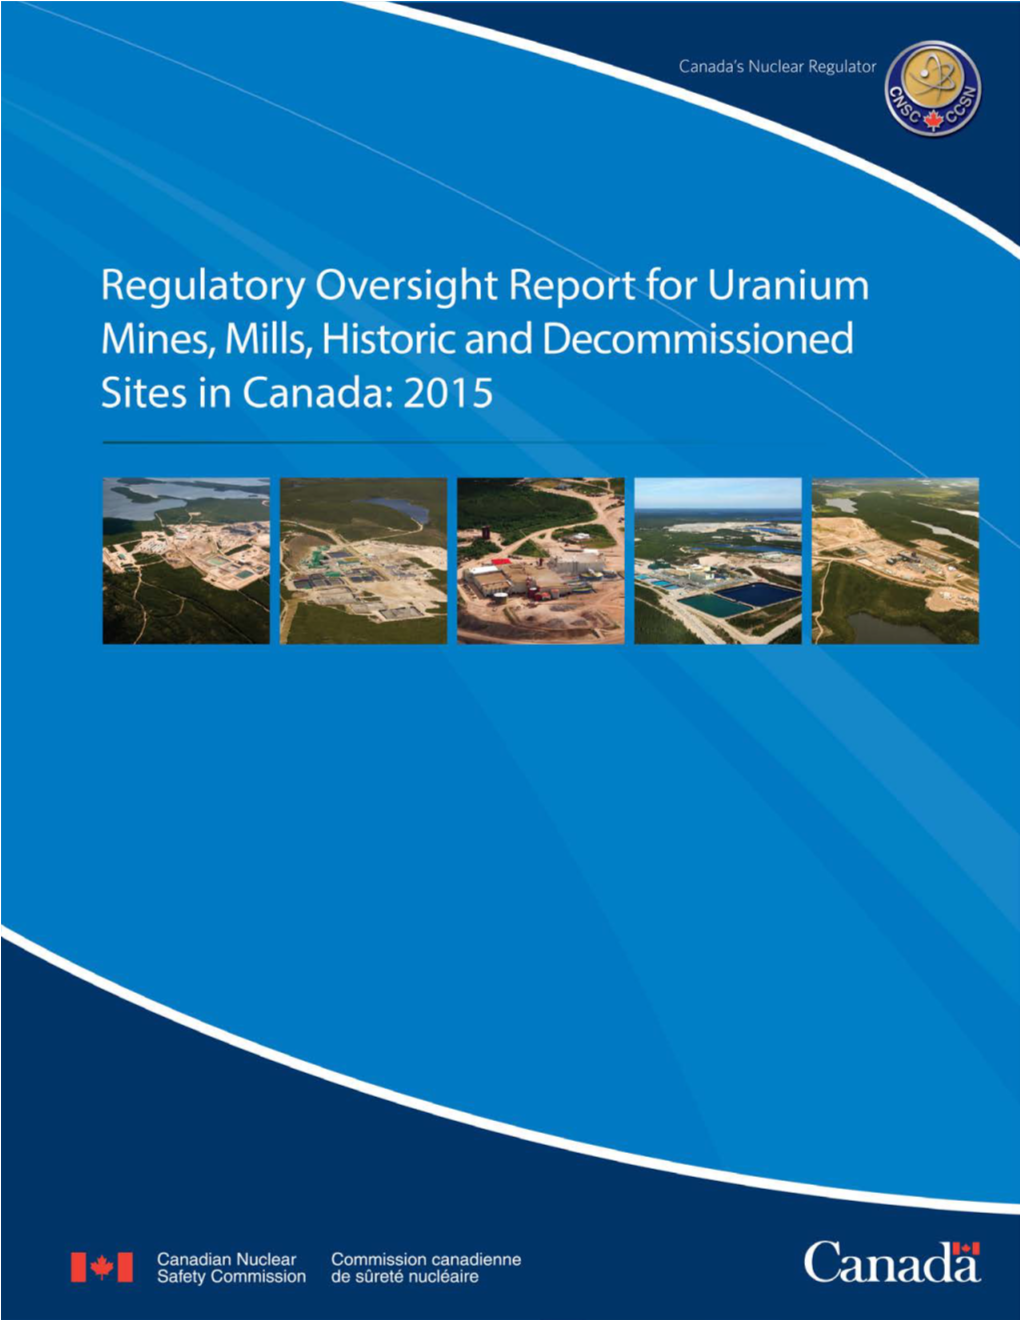 Regulatory Oversight Report for Uranium Mines and Mills in Canada